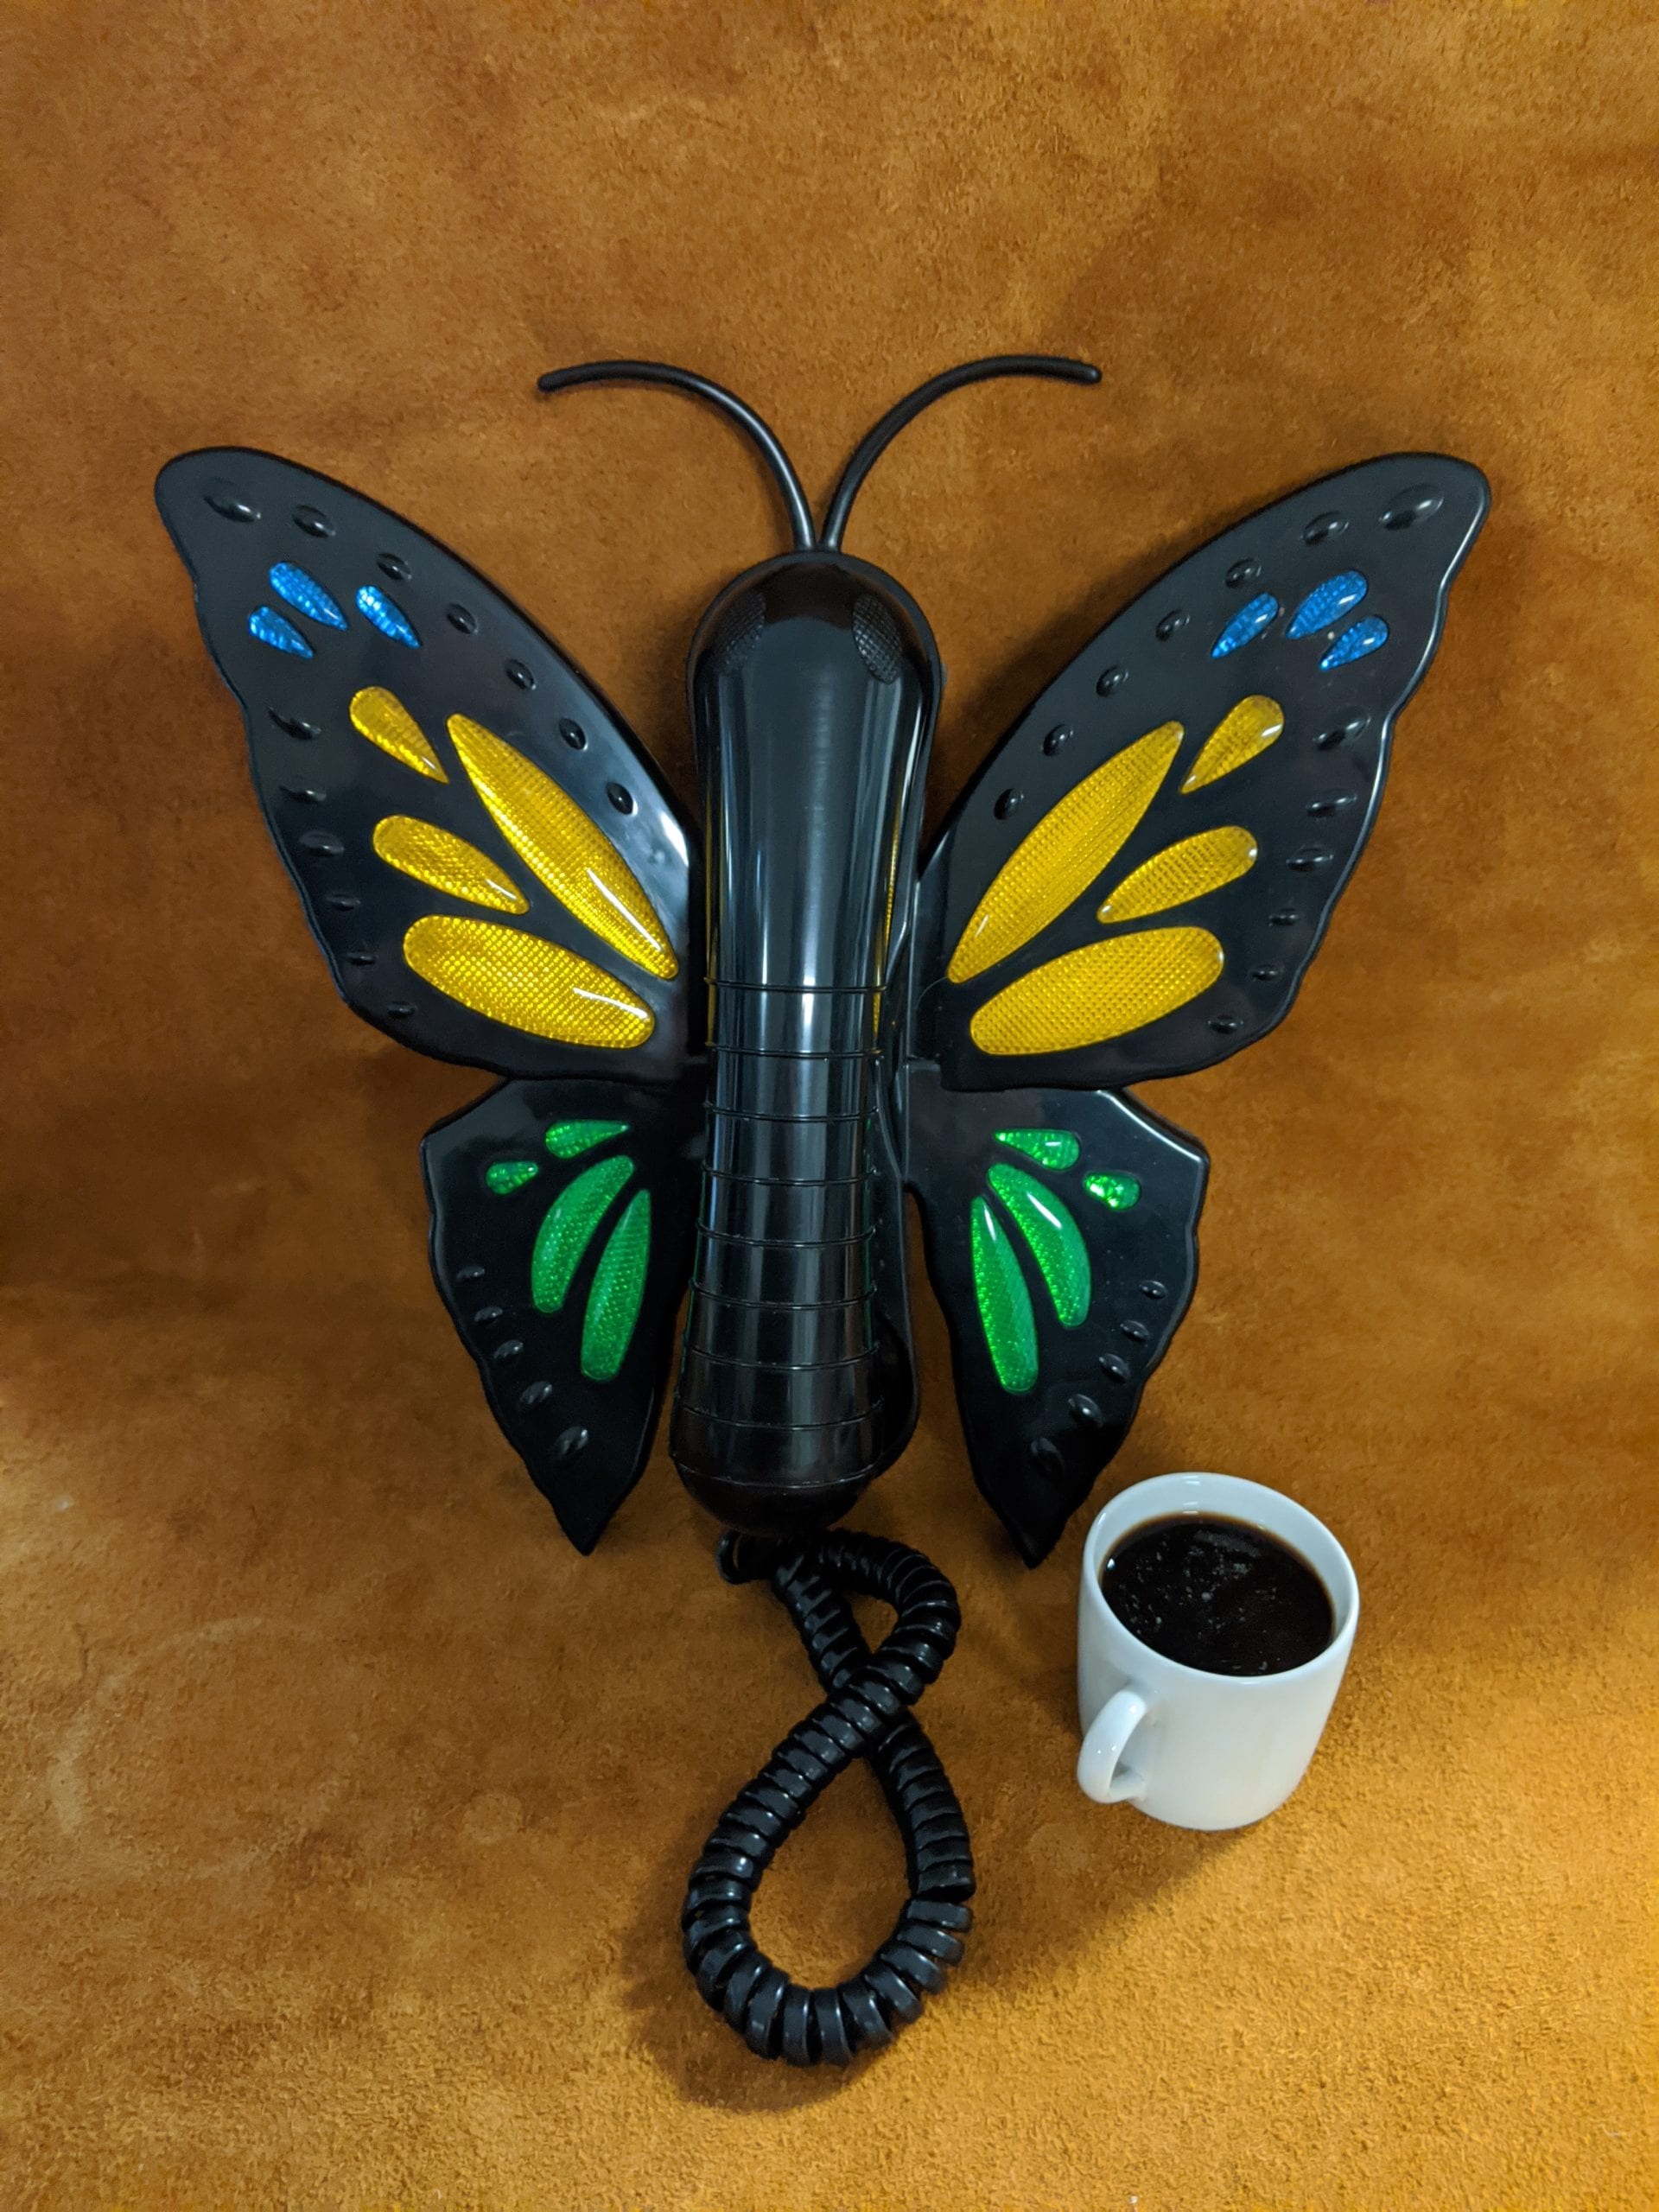 Good Morning - Enjoying Coffee & Telephones at The Telephone Museum ☕☕☕☕☎☎☎☎☕☕☕☕☎☎☎☎